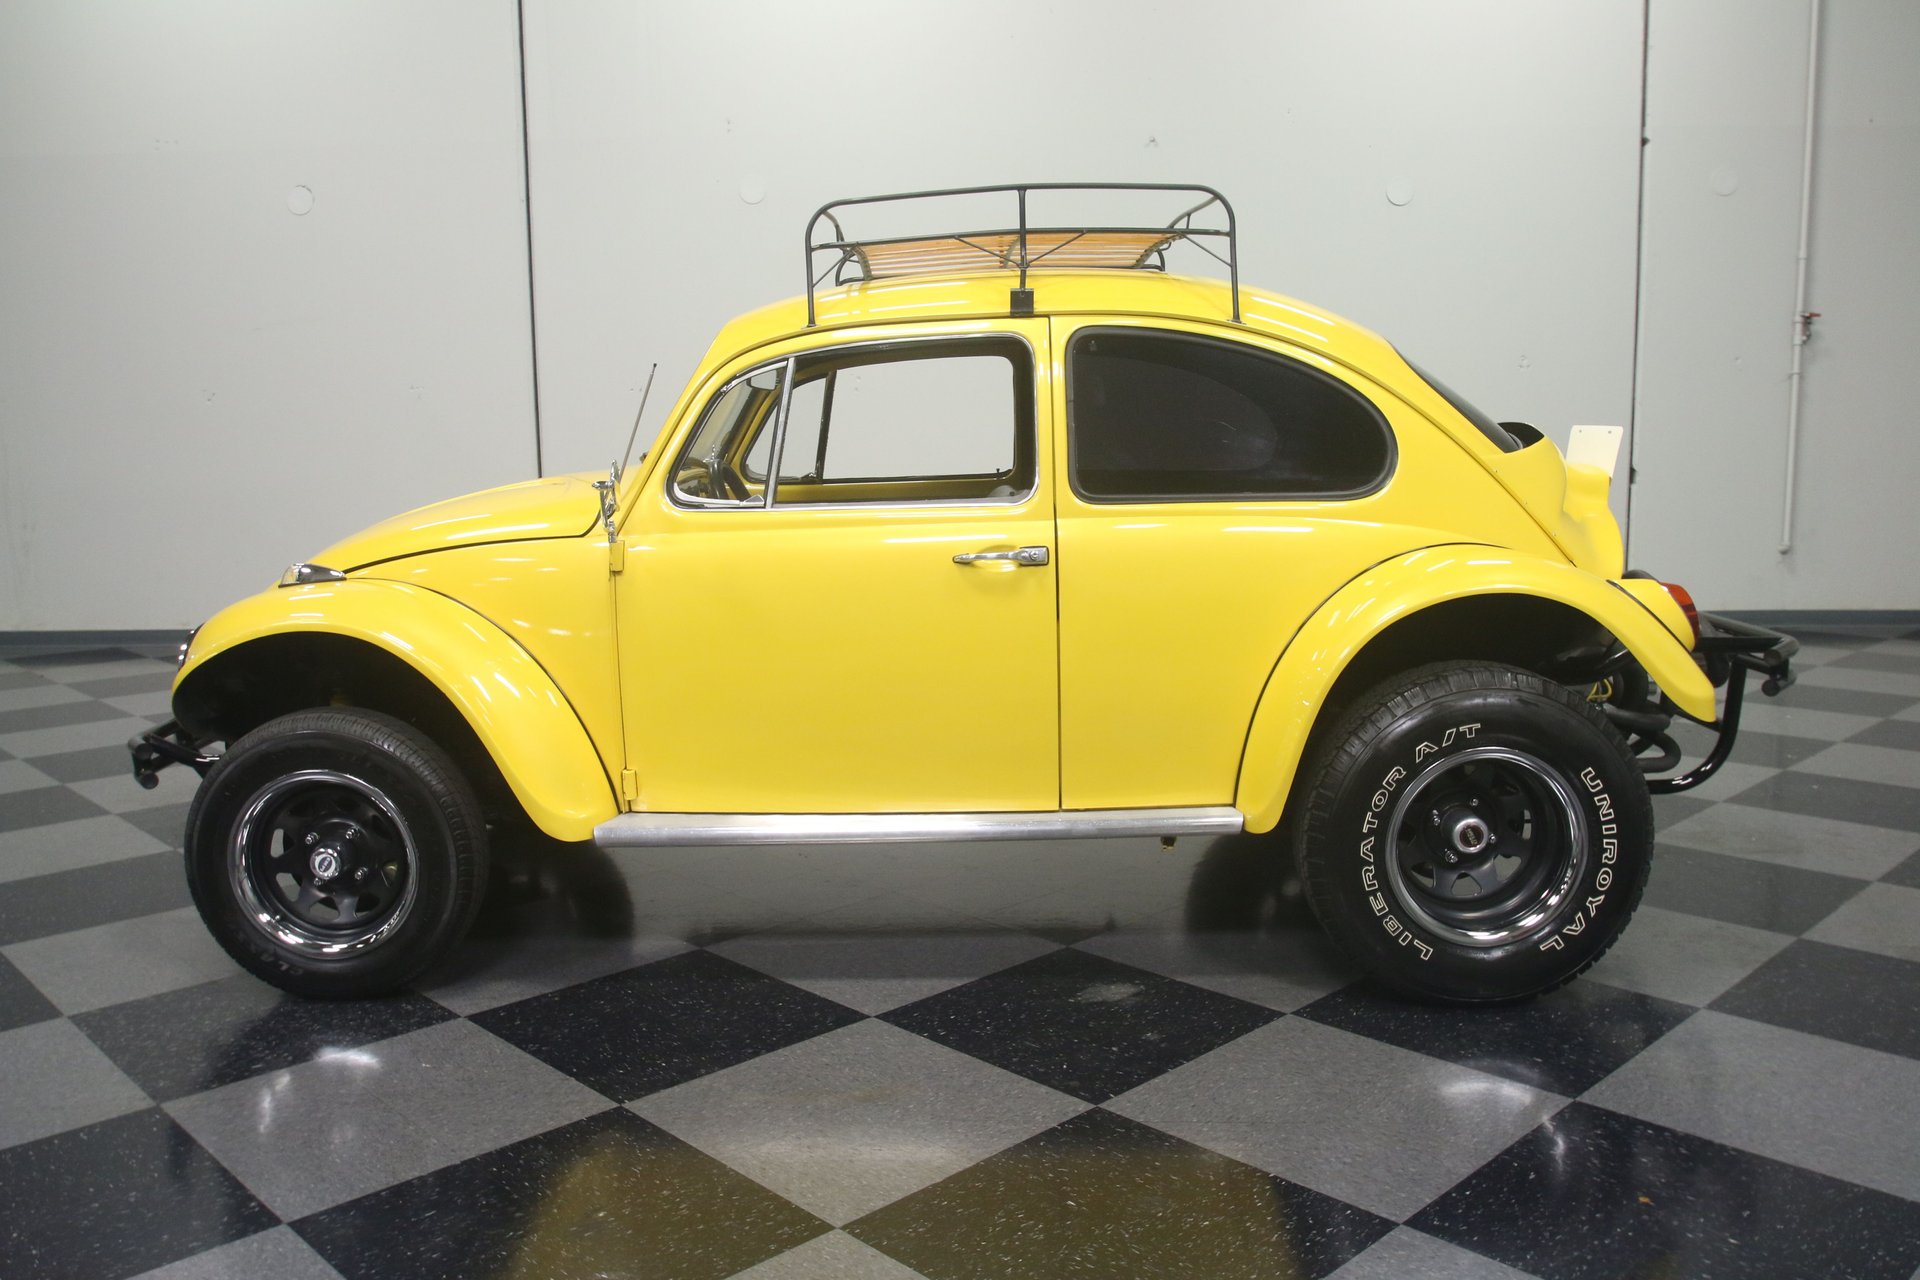 1969 Volkswagen Baja Beetle Streetside Classics The Nation S